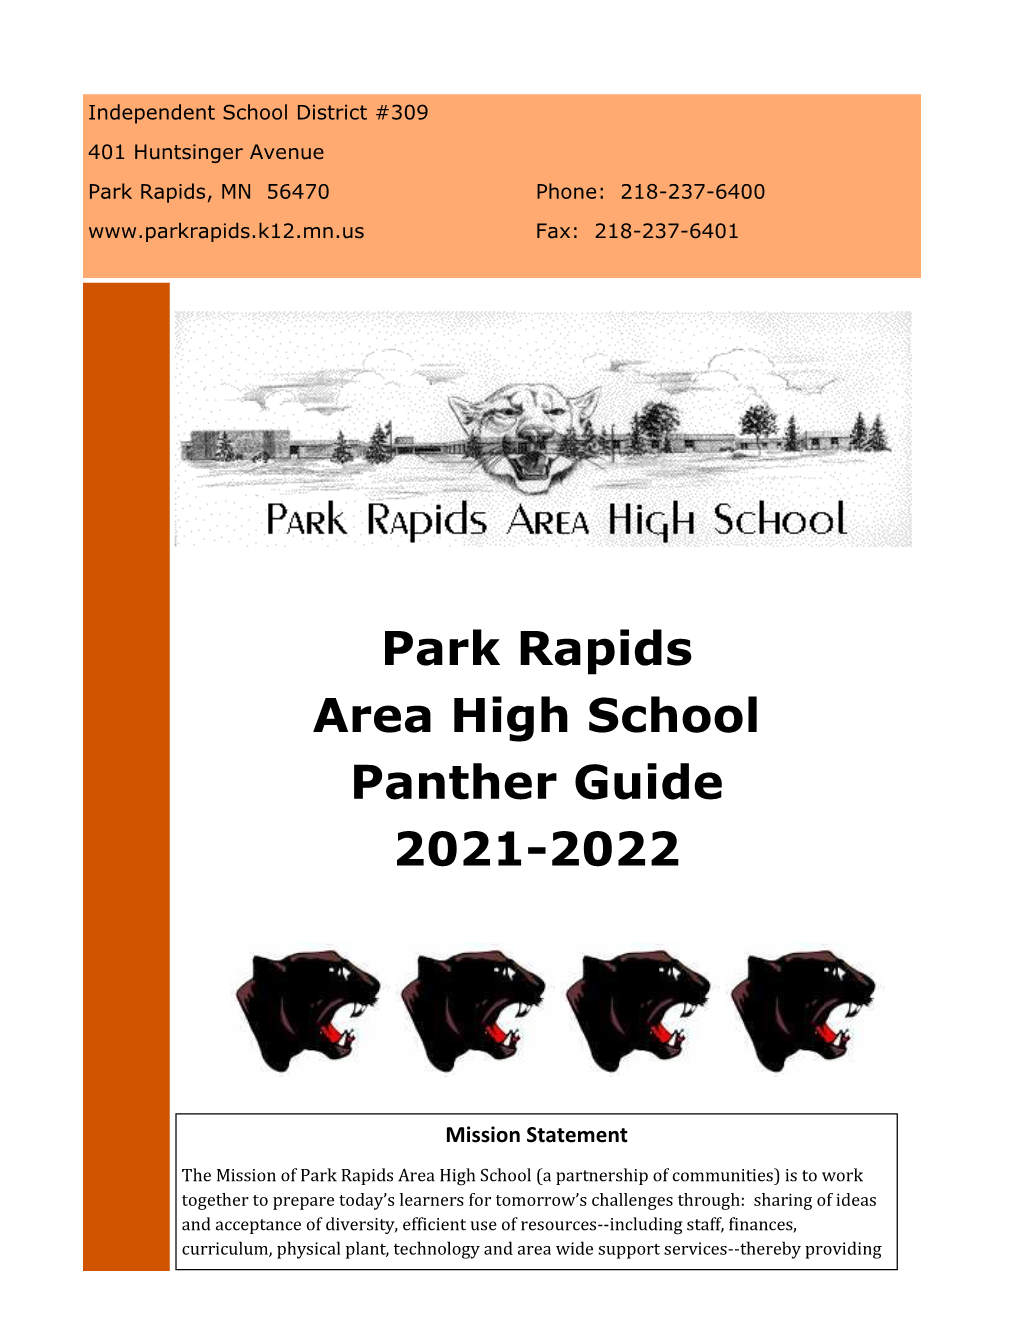 Park Rapids Area High School Panther Guide 2021-2022